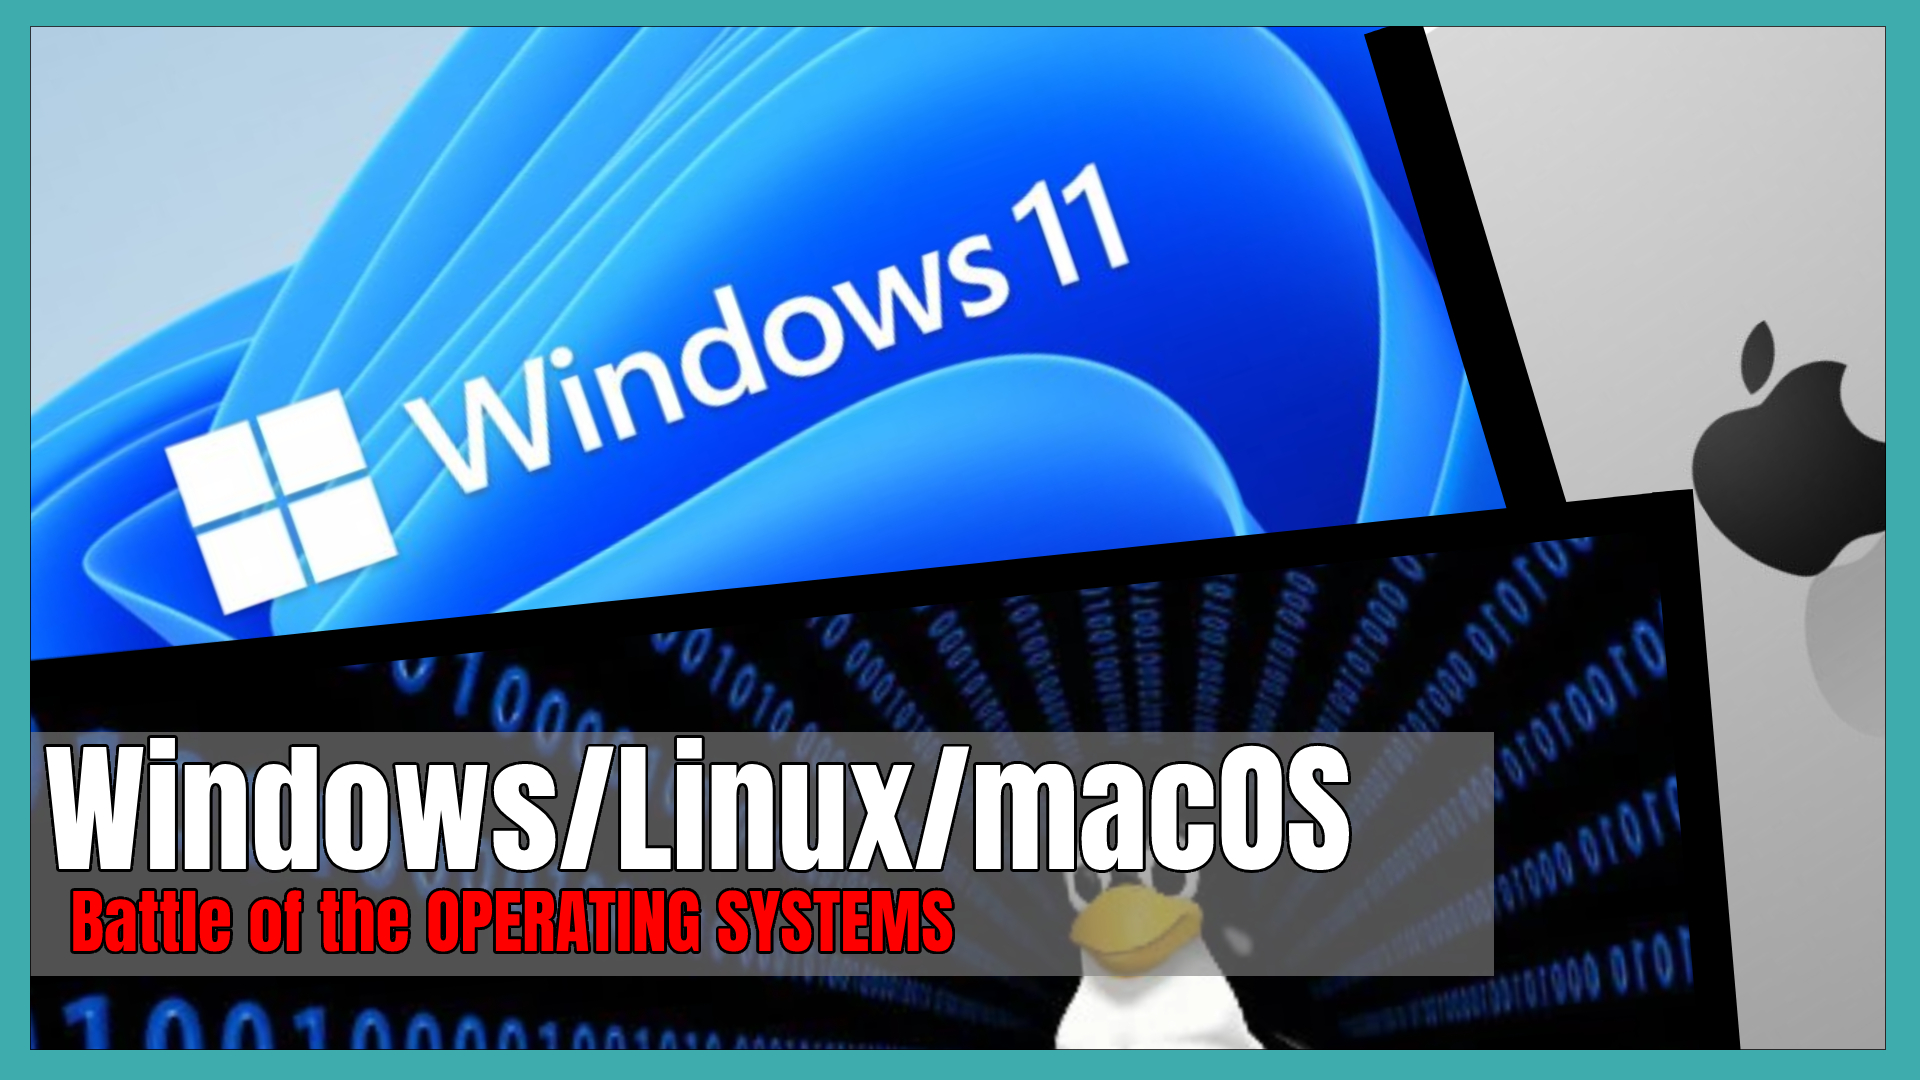 Linux vs Windows vs macOS